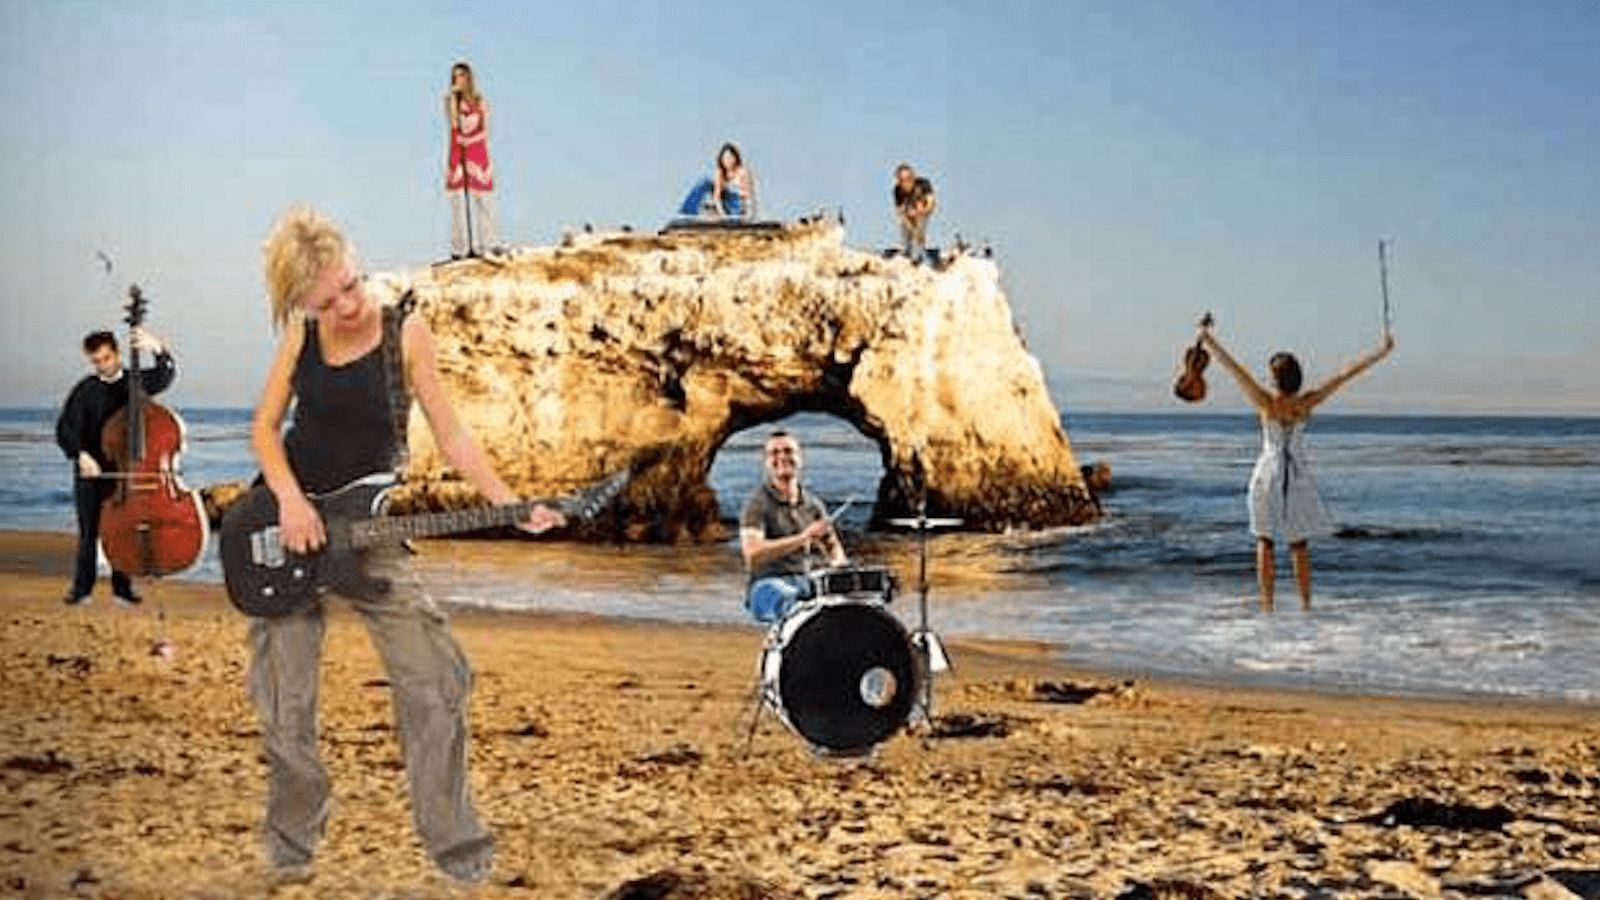 Photoshopped image of kids playing instruments on the beach for Santa Cruz Jazz Fest in Santa Cruz, California.